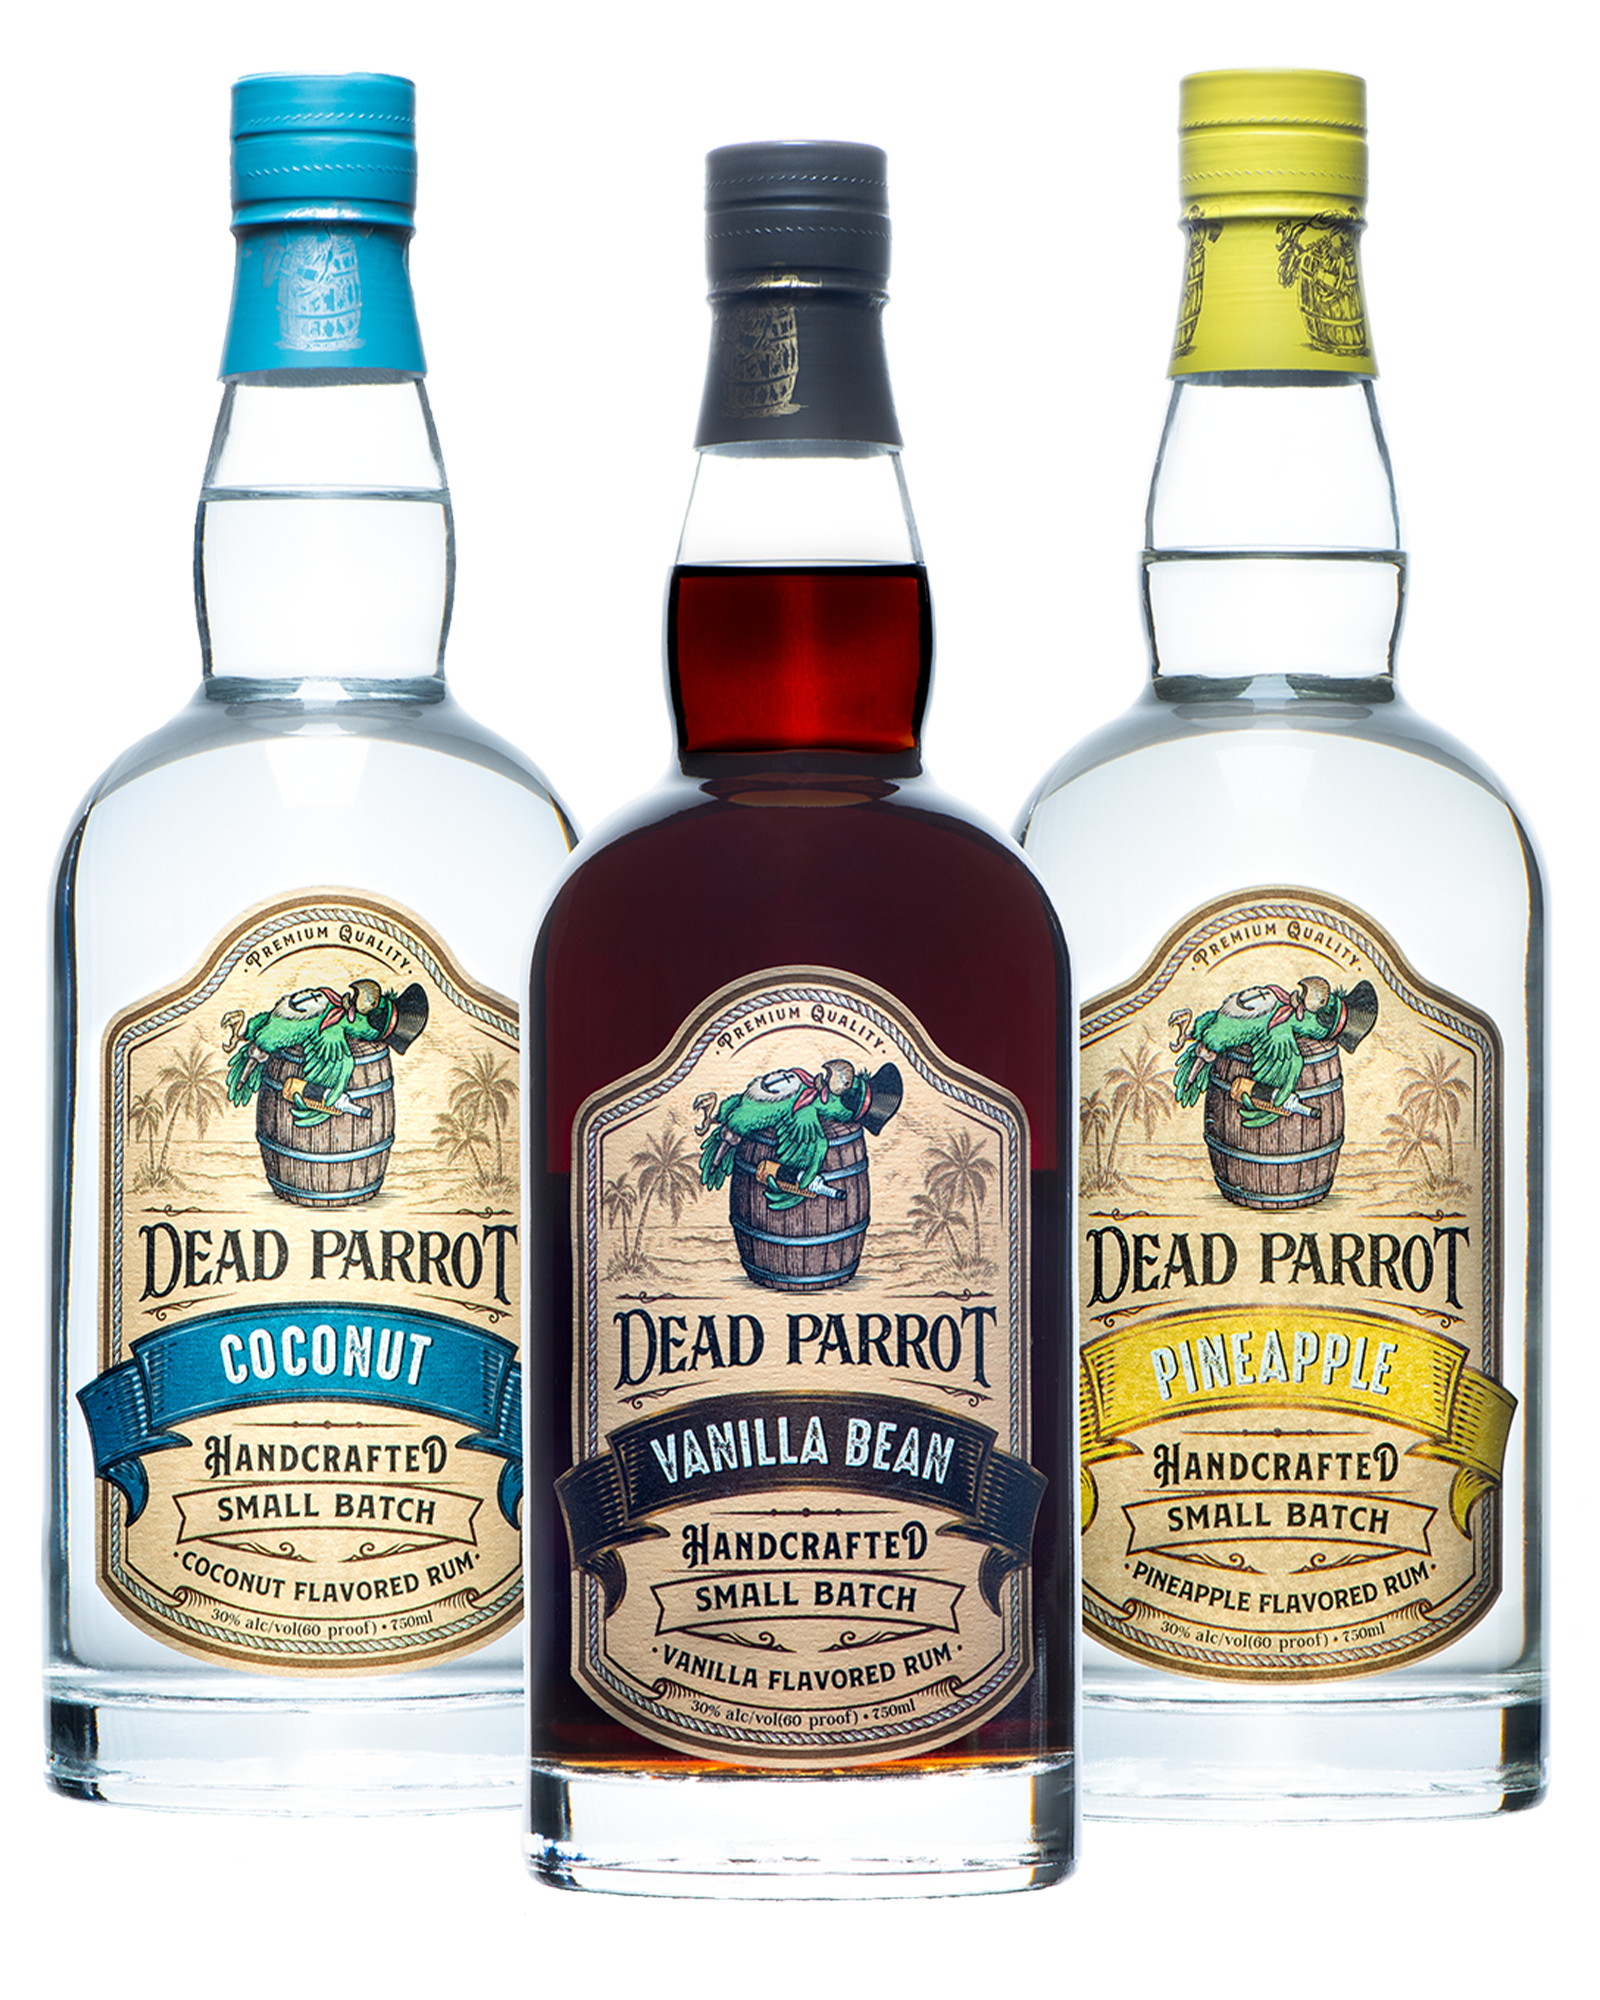 Dead Parrot Coconut Rum, Vanilla Bean Rum, and Pineapple Rum bottles